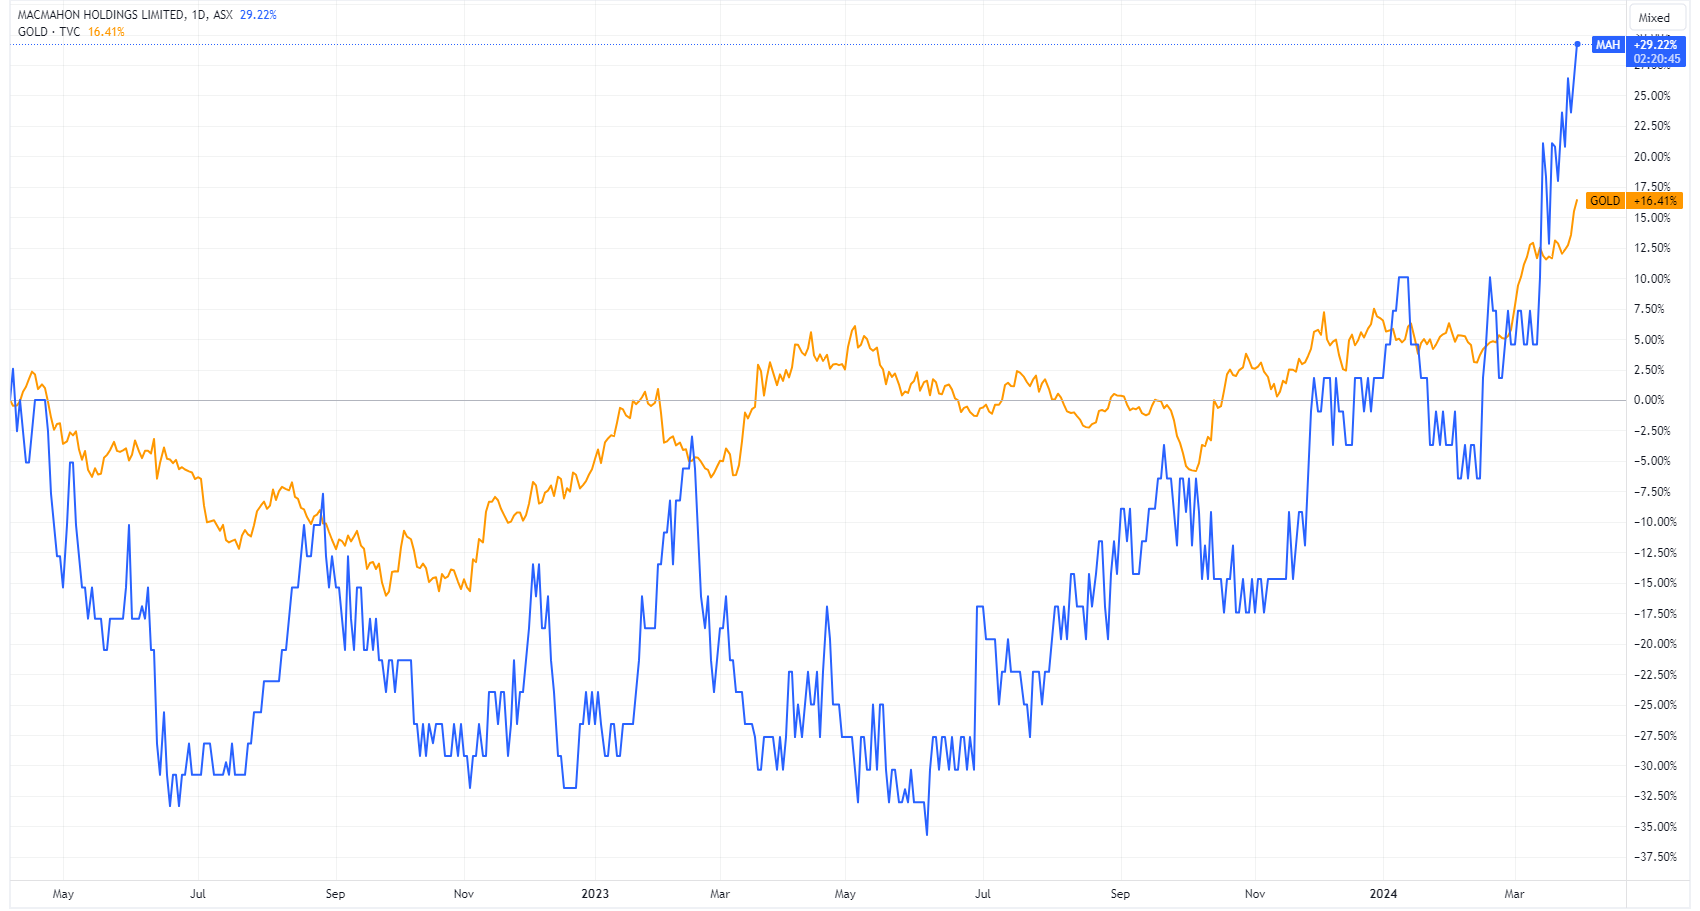 MAH vs Gold chart